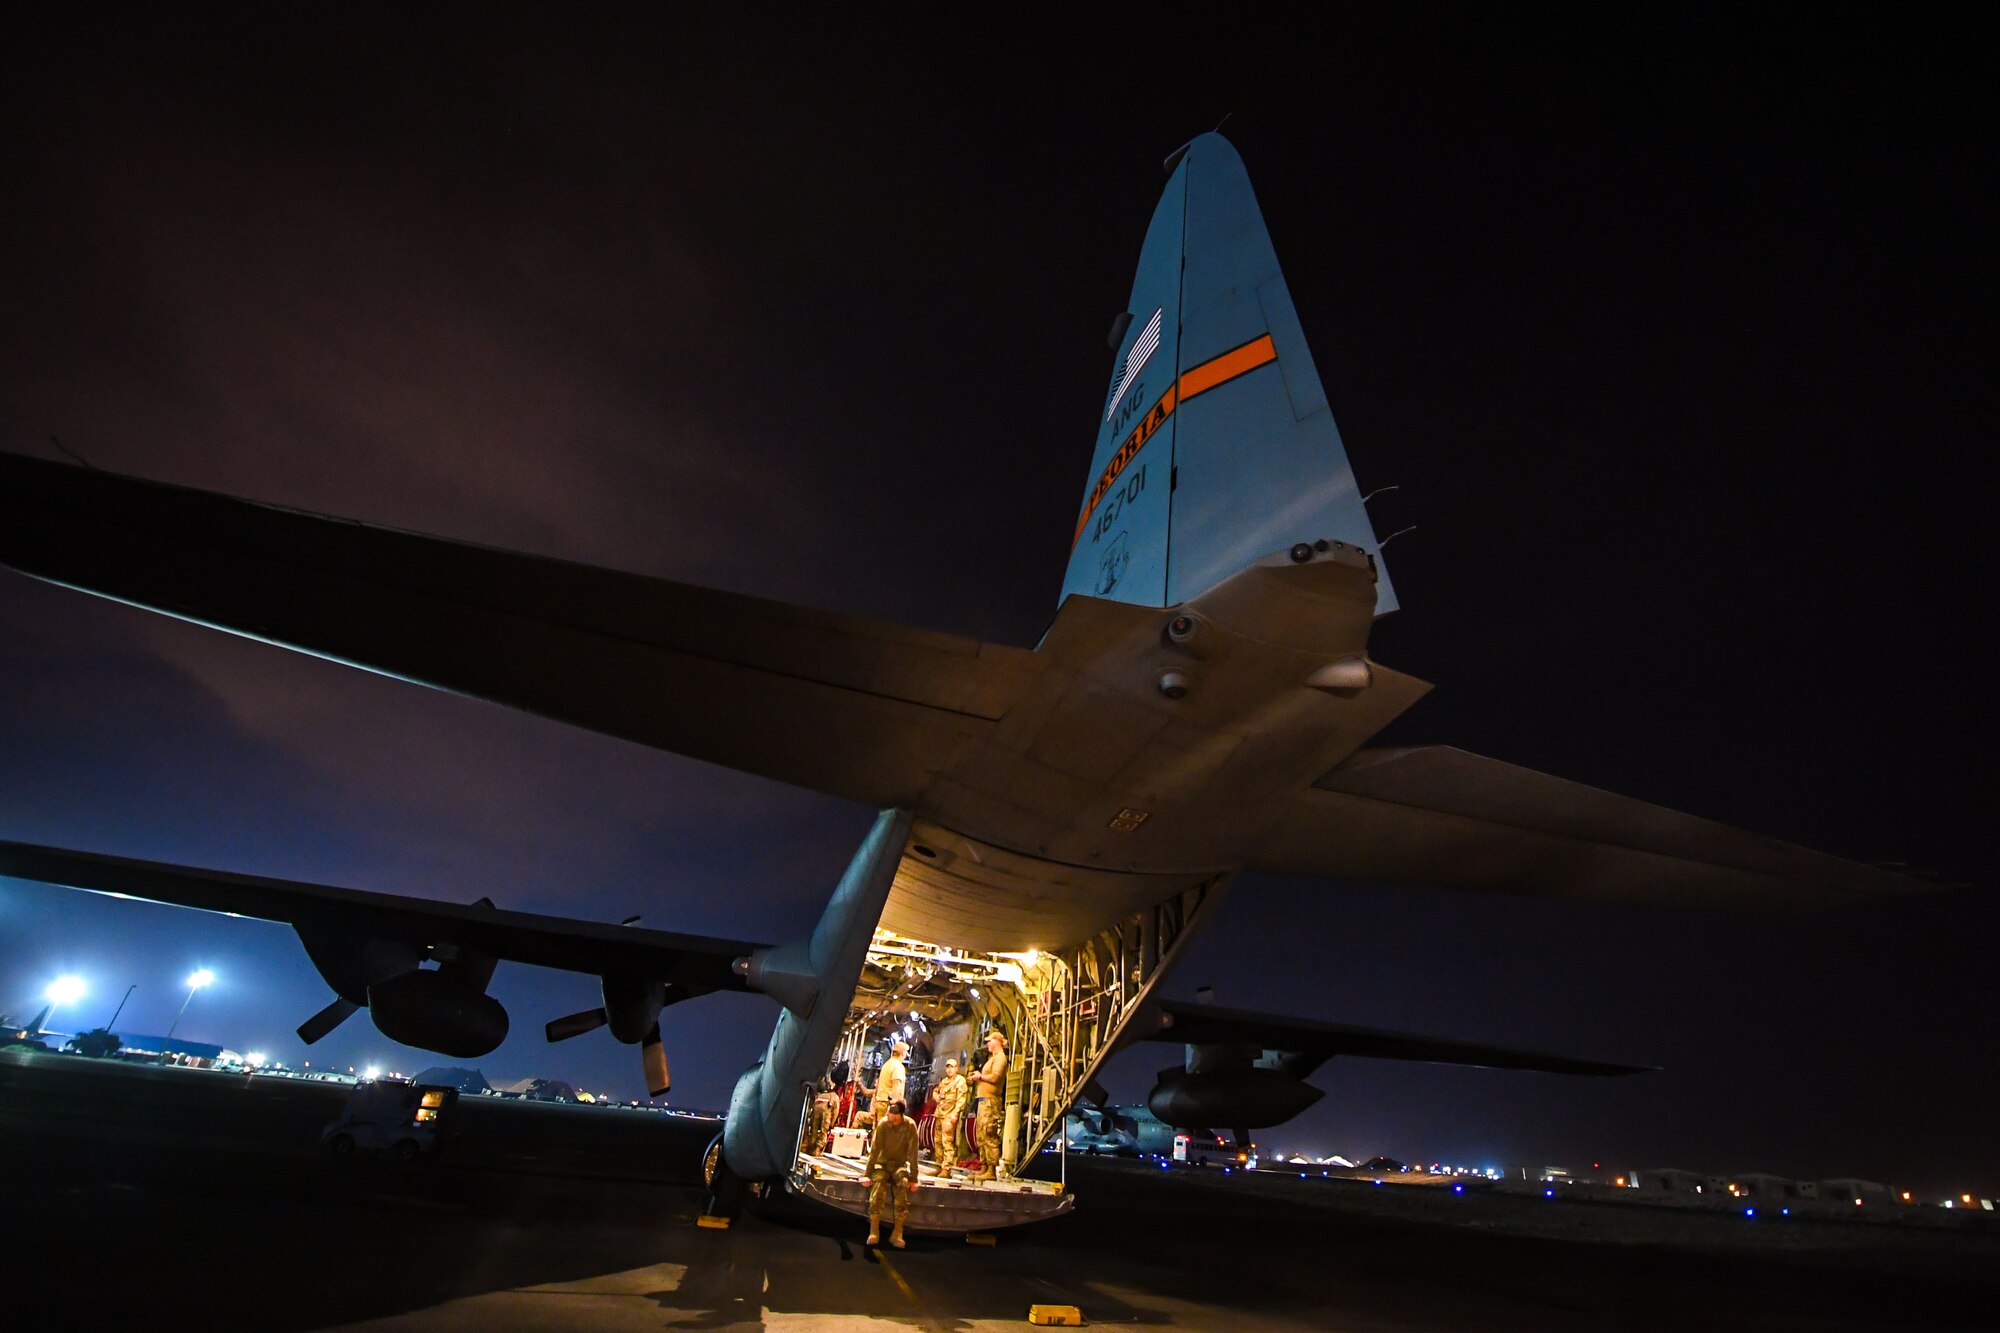 Airmen finalize pre-flight inspections on a C-130 Hercules